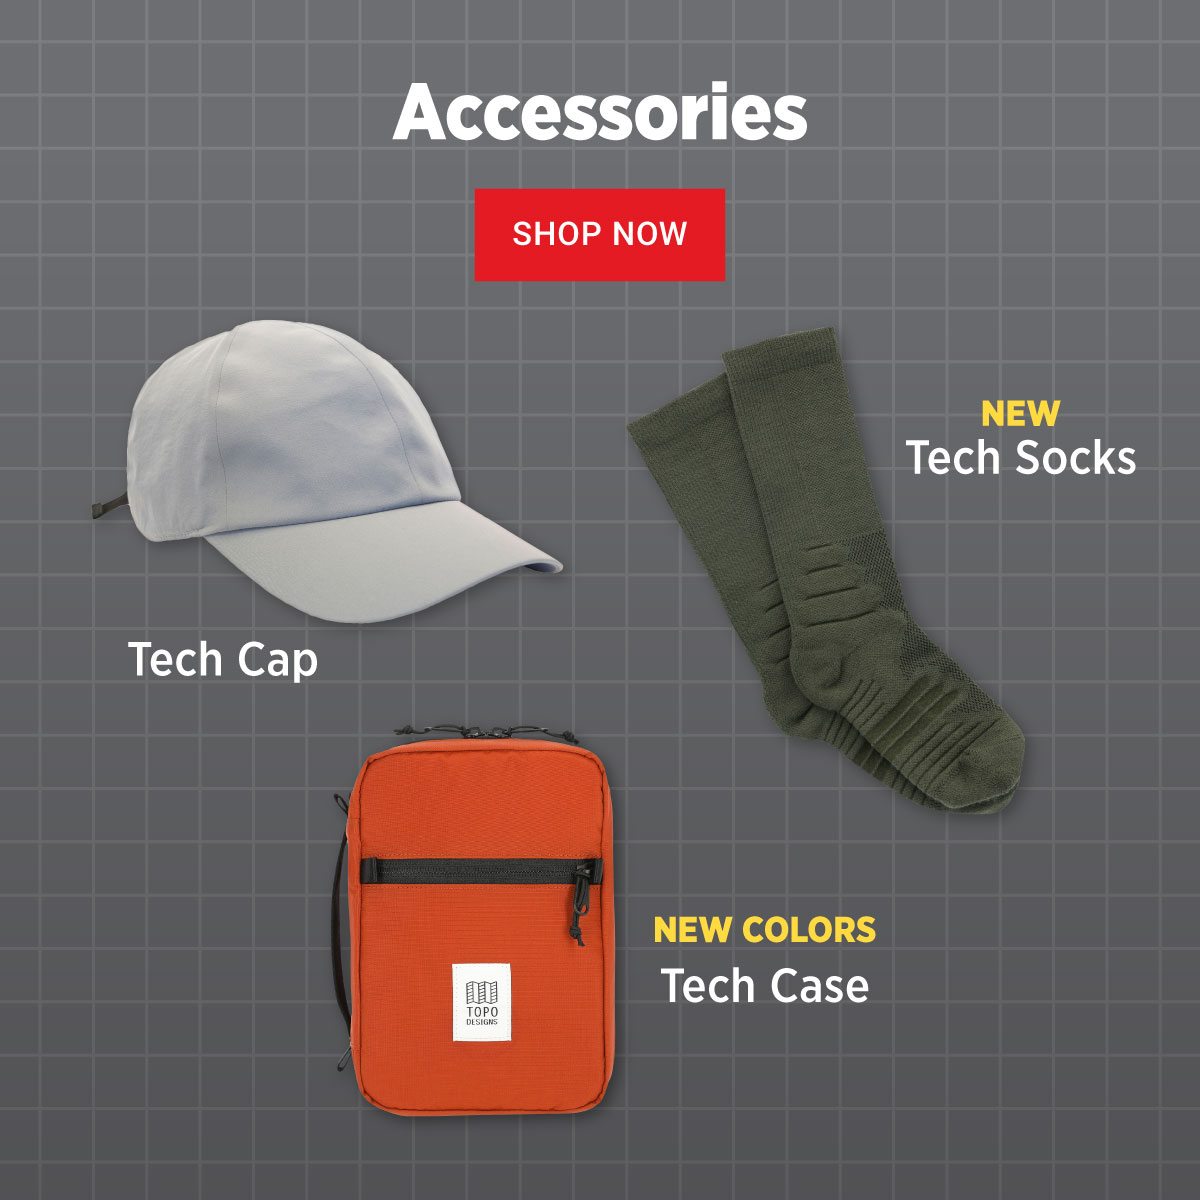 ACCESSORIES - NEW TECH SOCKS, TECH CAP, NEW COLORS OF TECH CASE